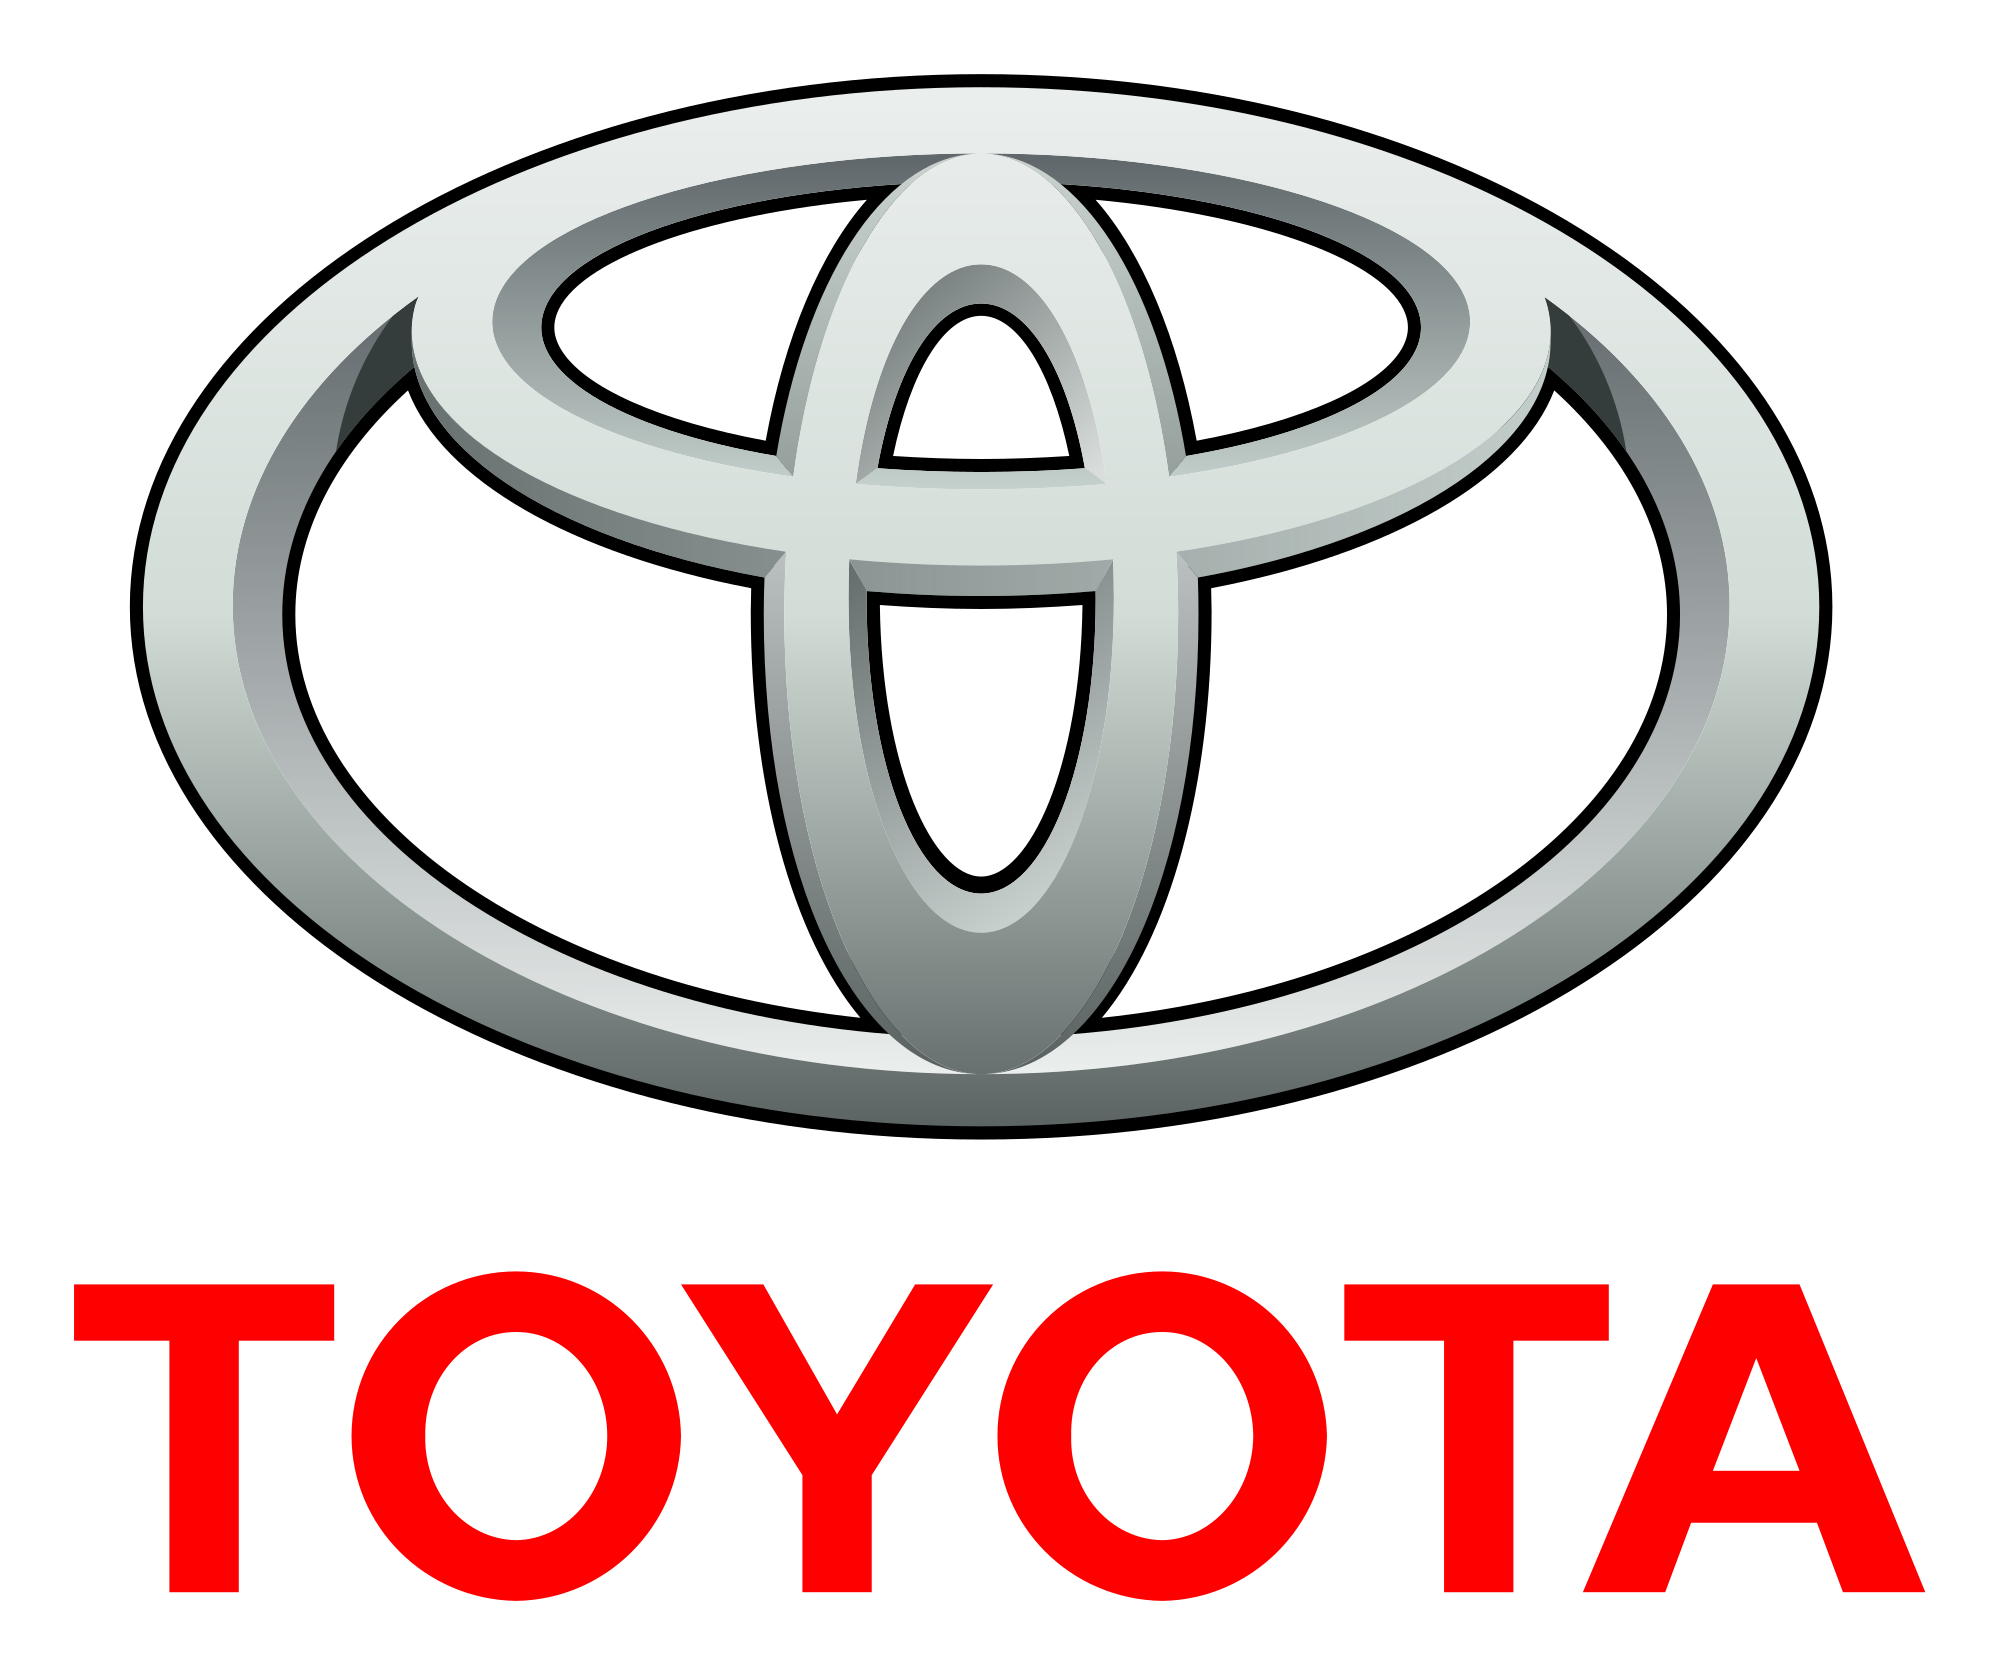 Toyota logo.png